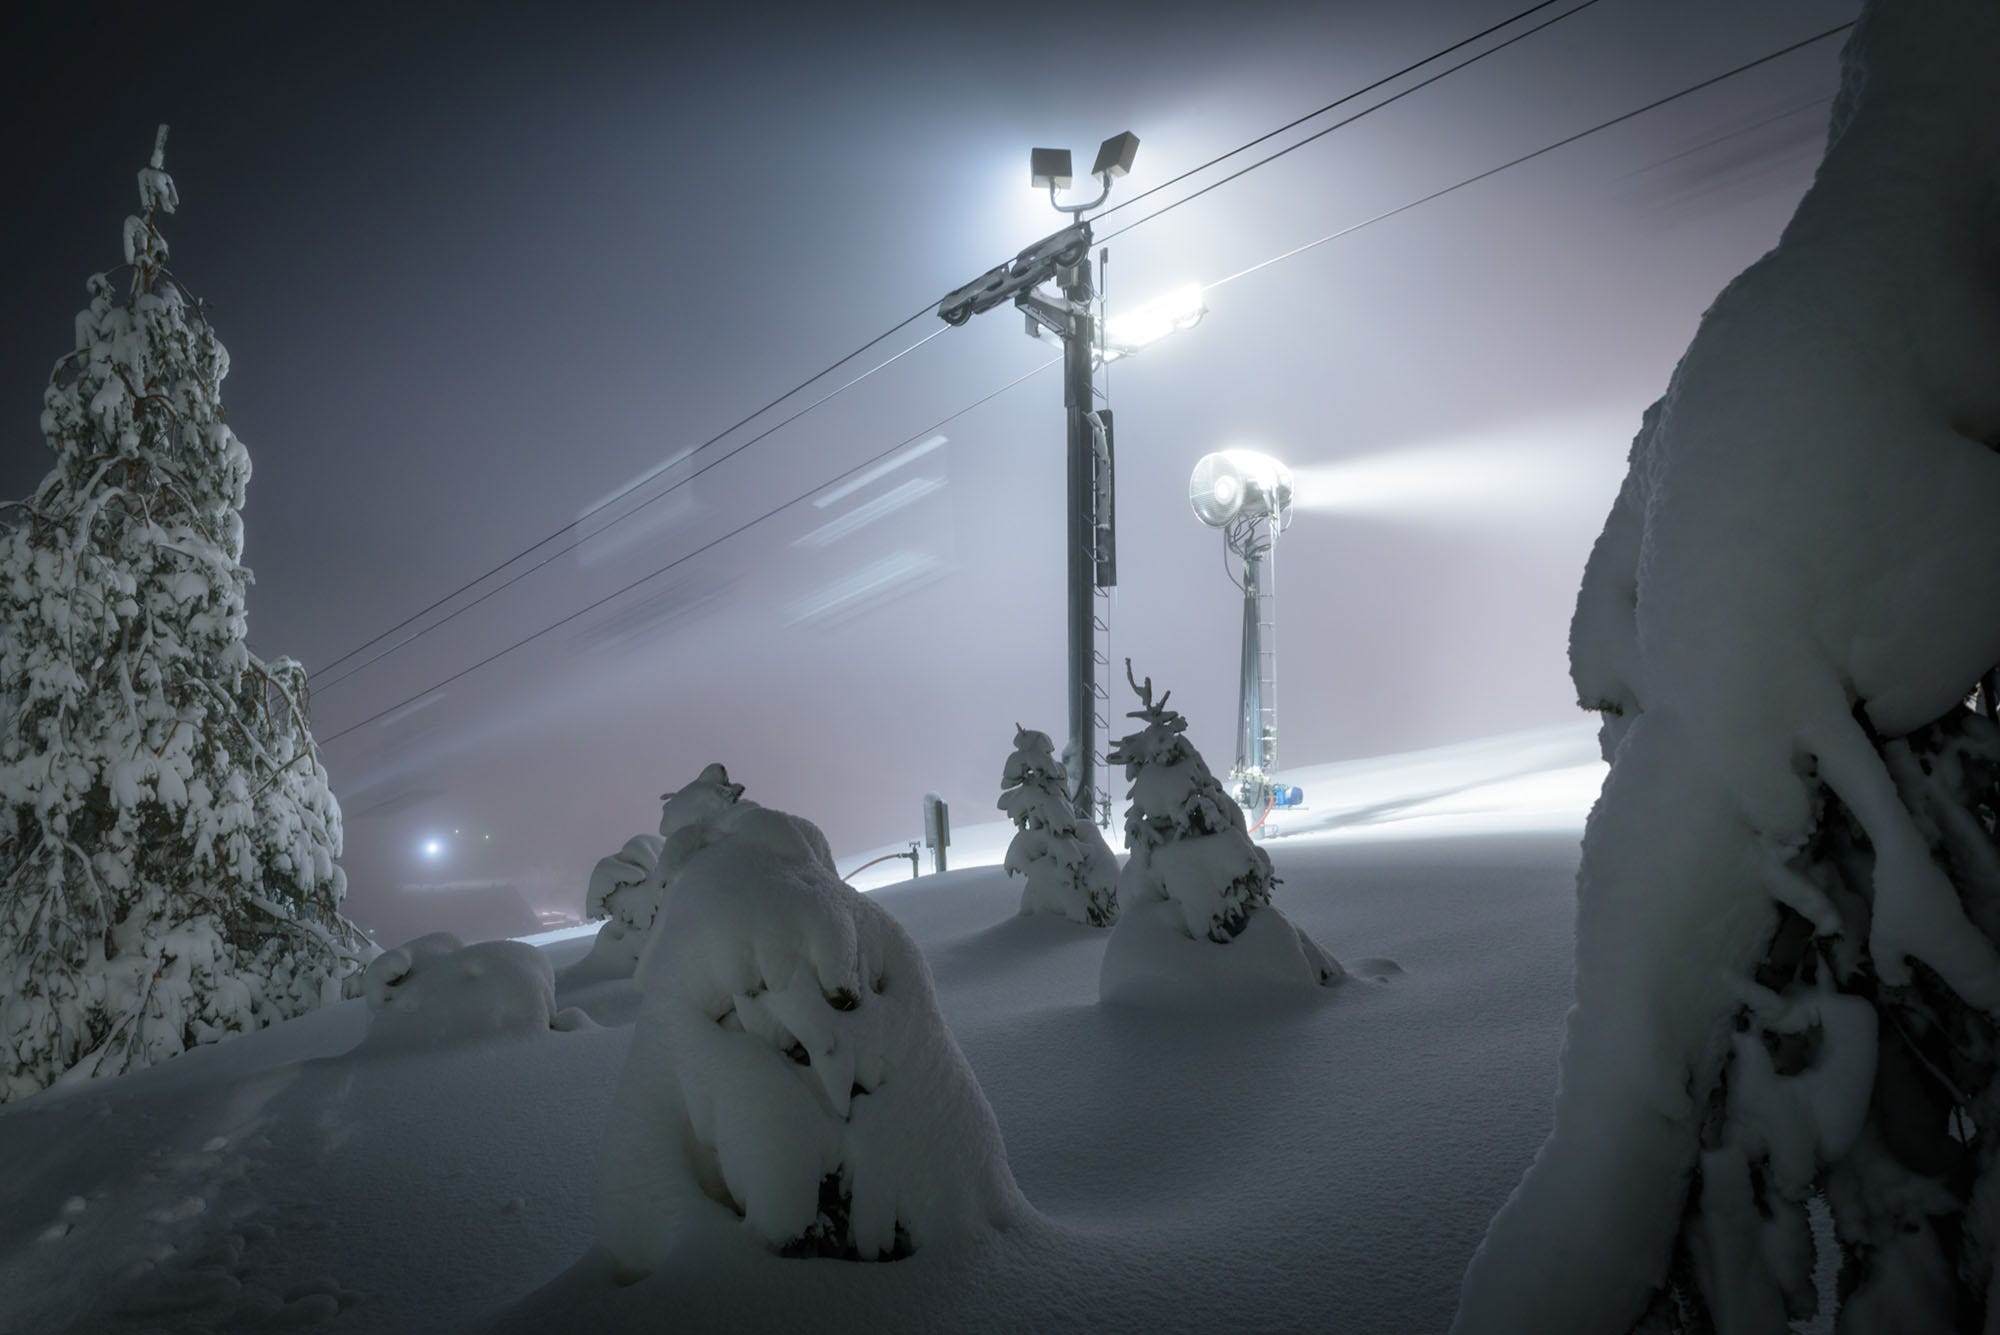 Podcast #88: Snow Trails, Ohio General Manager Scott Crislip